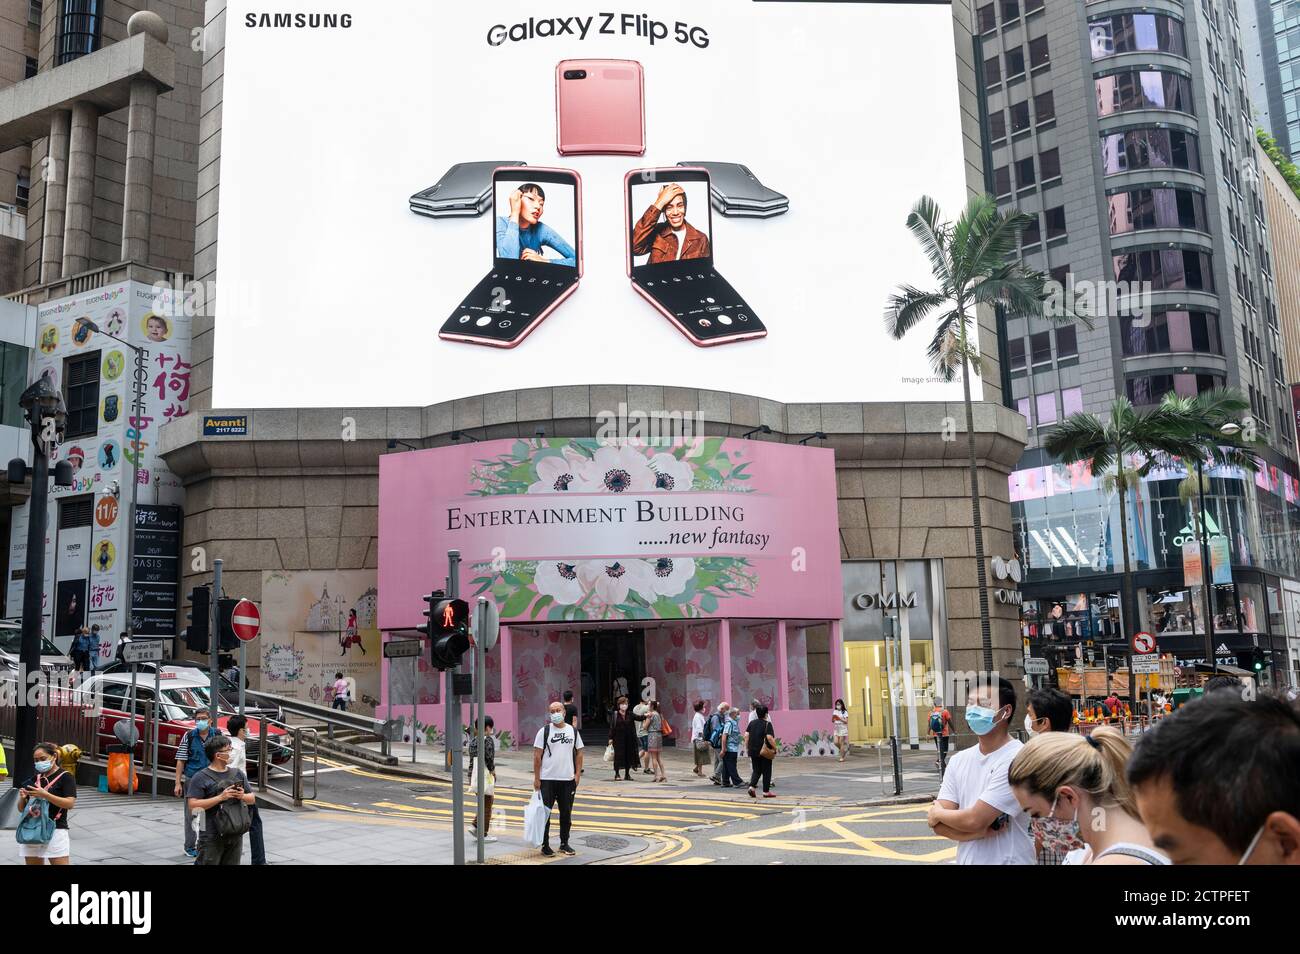 Samsung Galaxy Z Flip enters in South Korean markets - The Statesman